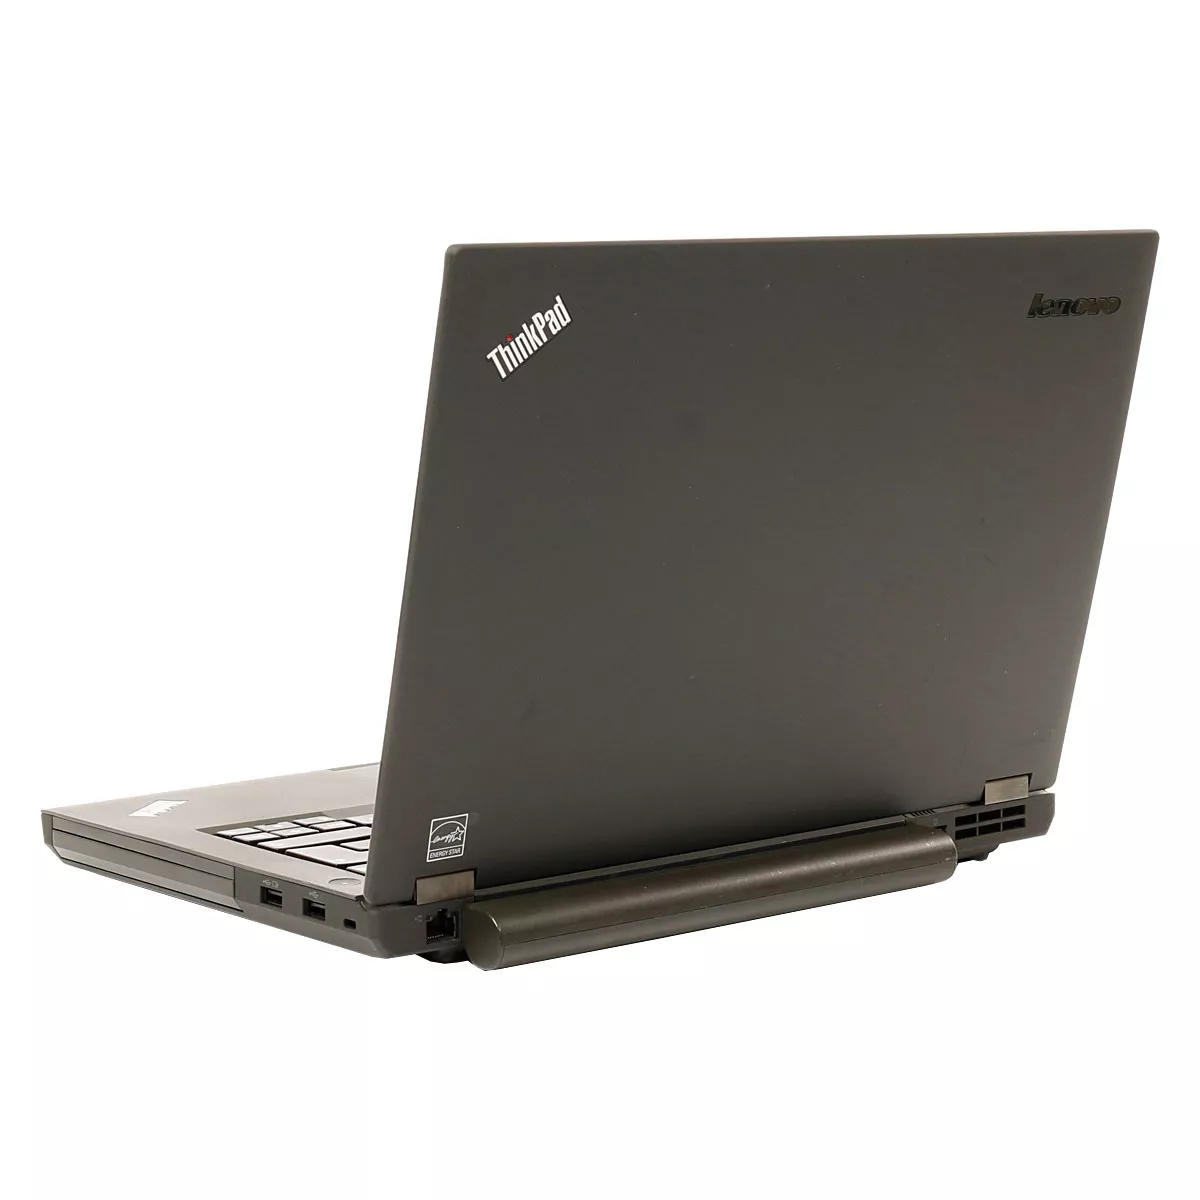 Lenovo ThinkPad T440p Core i5 4300M 2,6 GHz Webcam